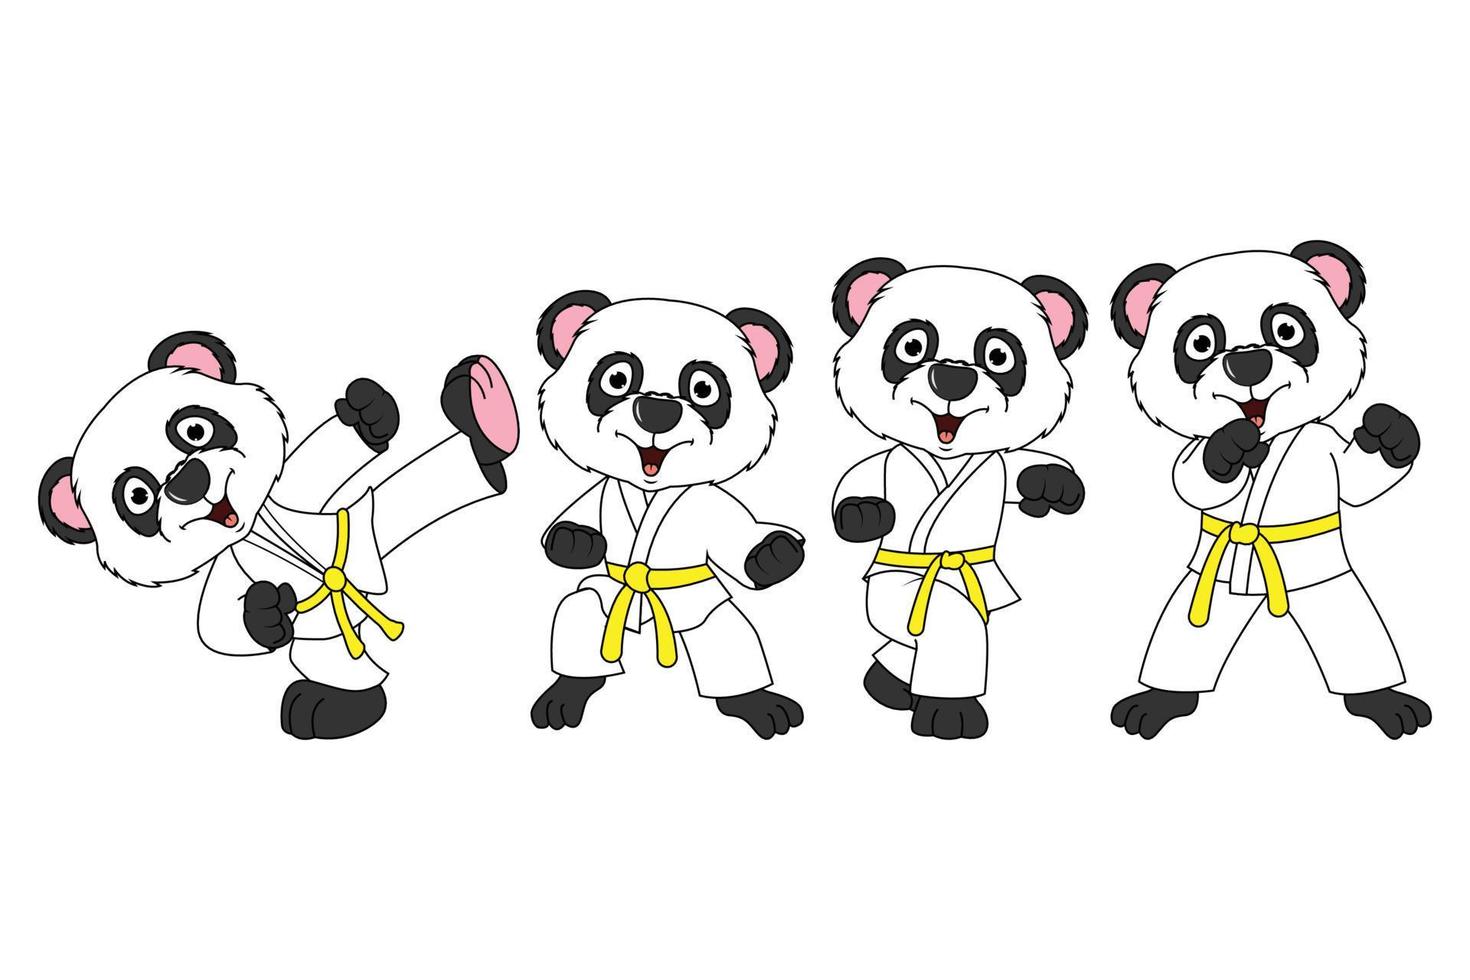 karaté de dessin animé animal panda mignon vecteur